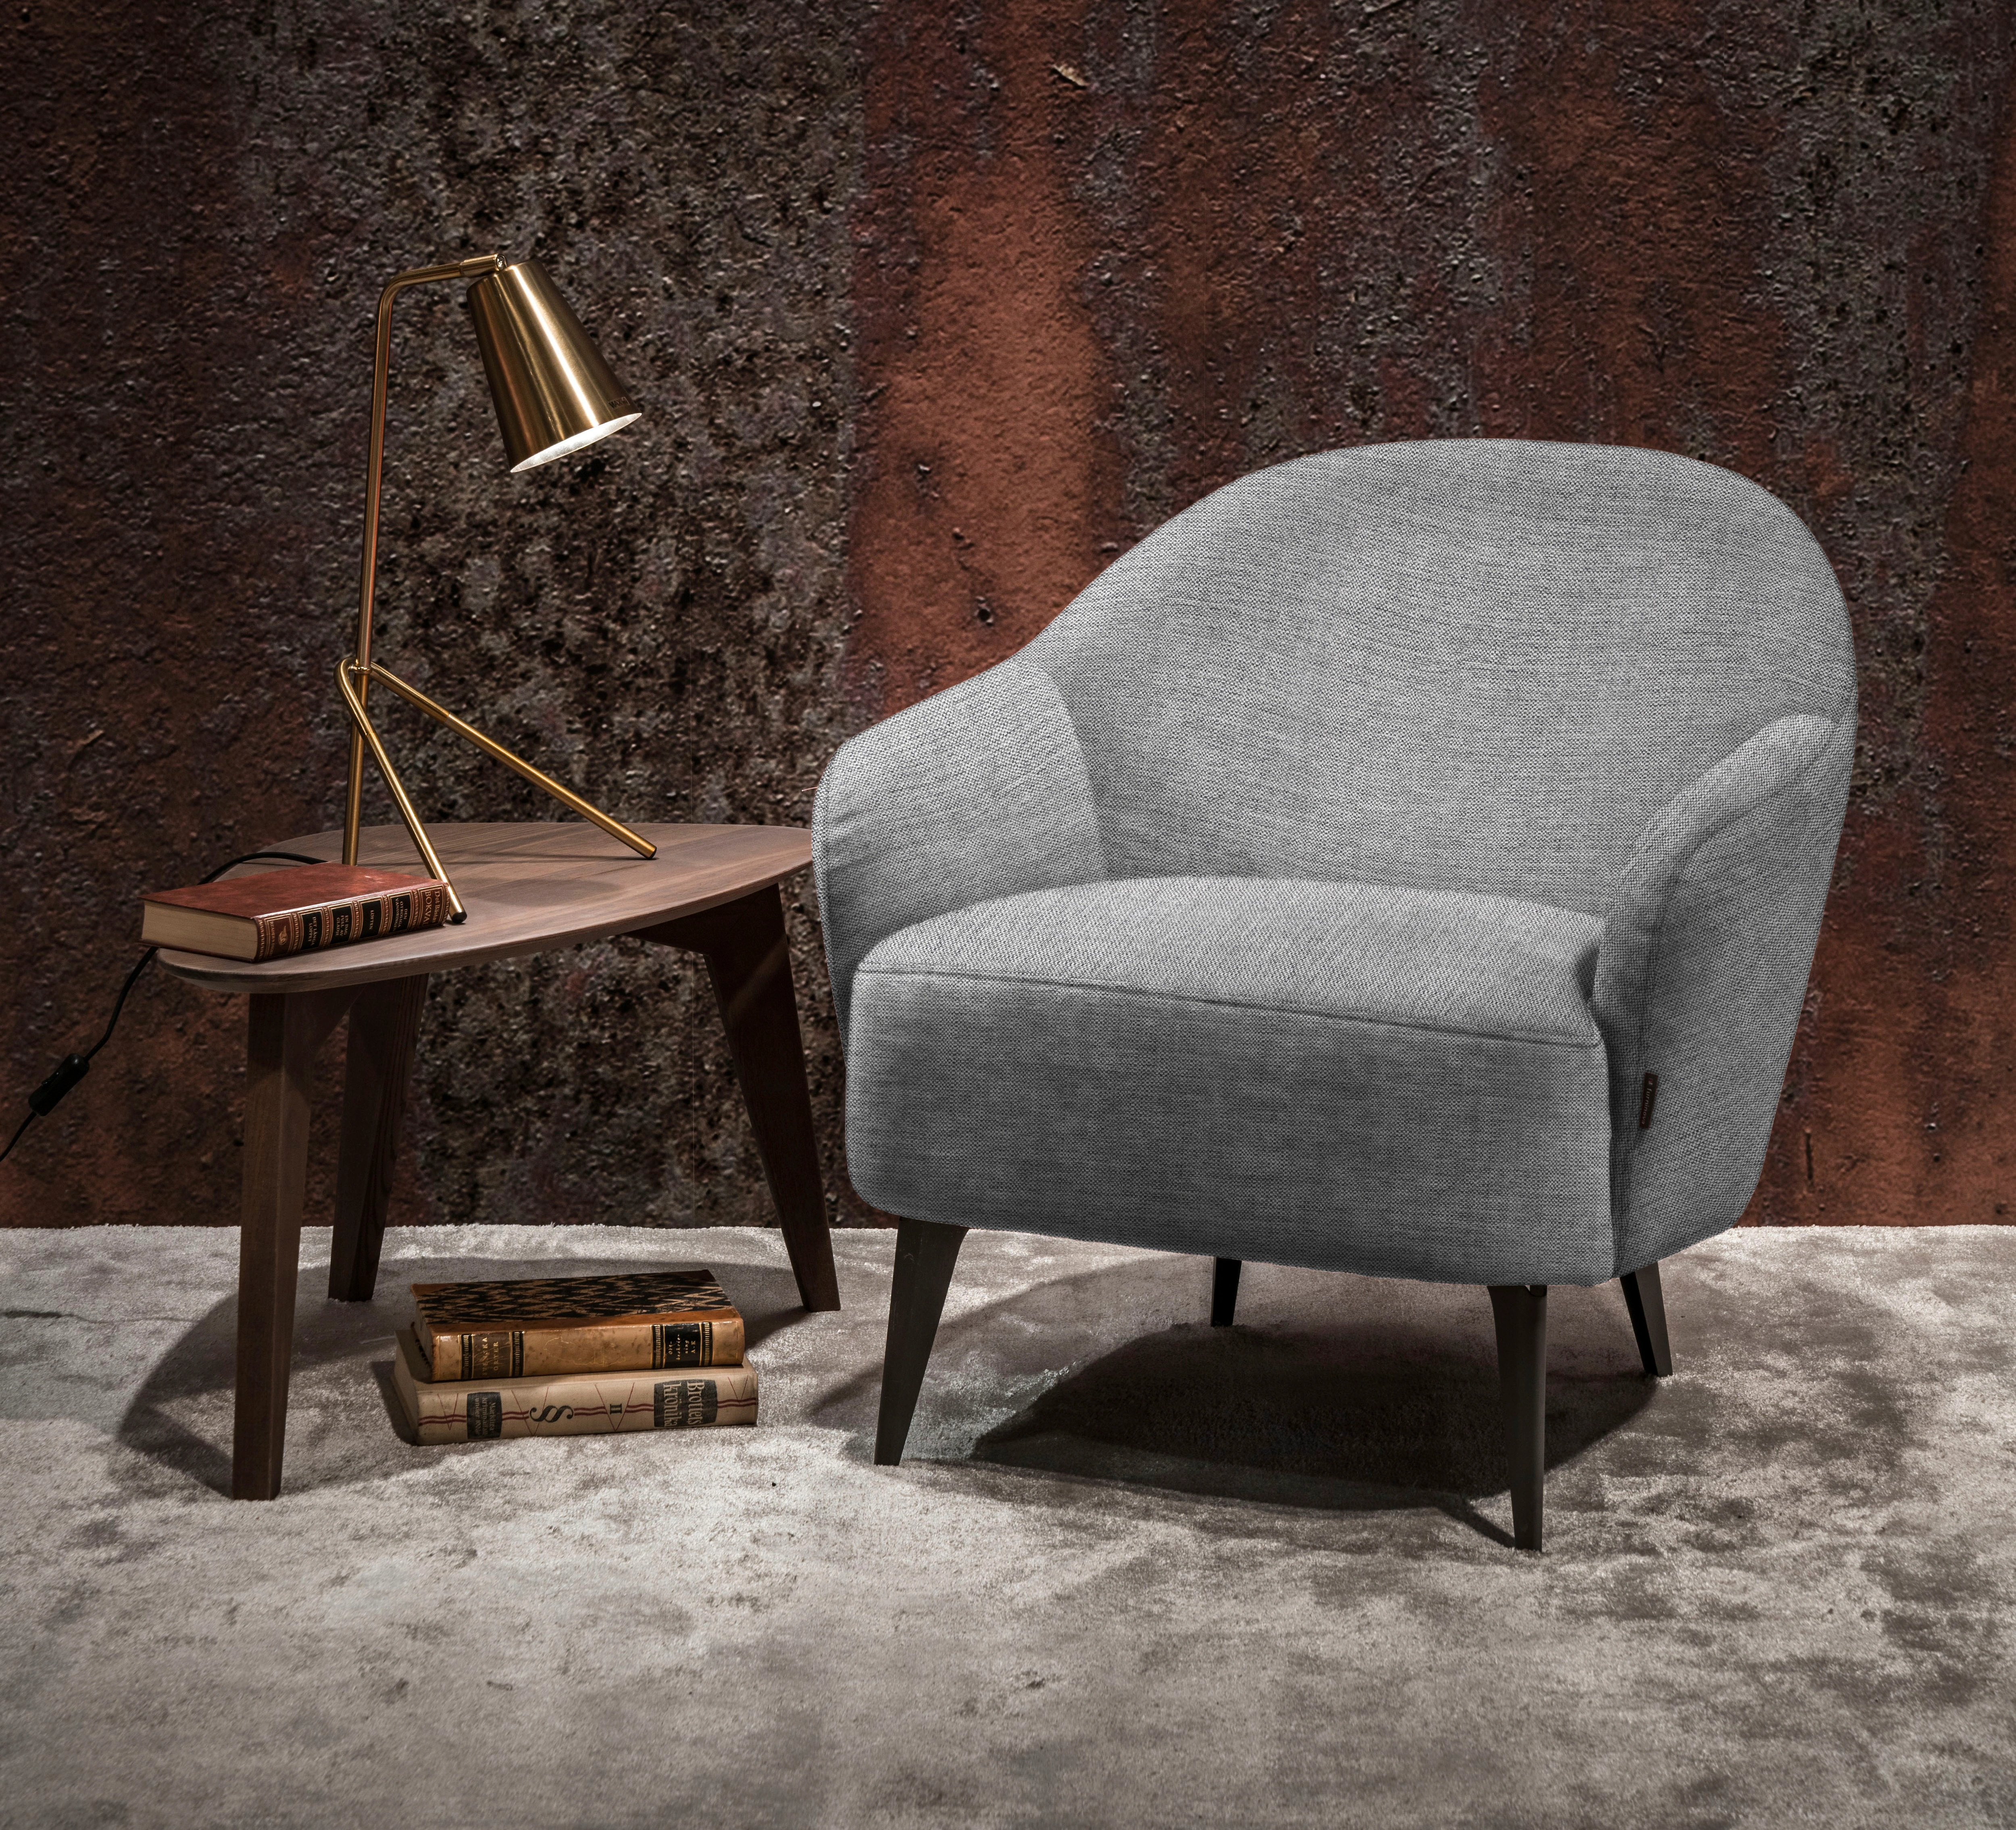 furninova Sessel "Paloma", mit Chromfuß, im skandinavischen Design günstig online kaufen